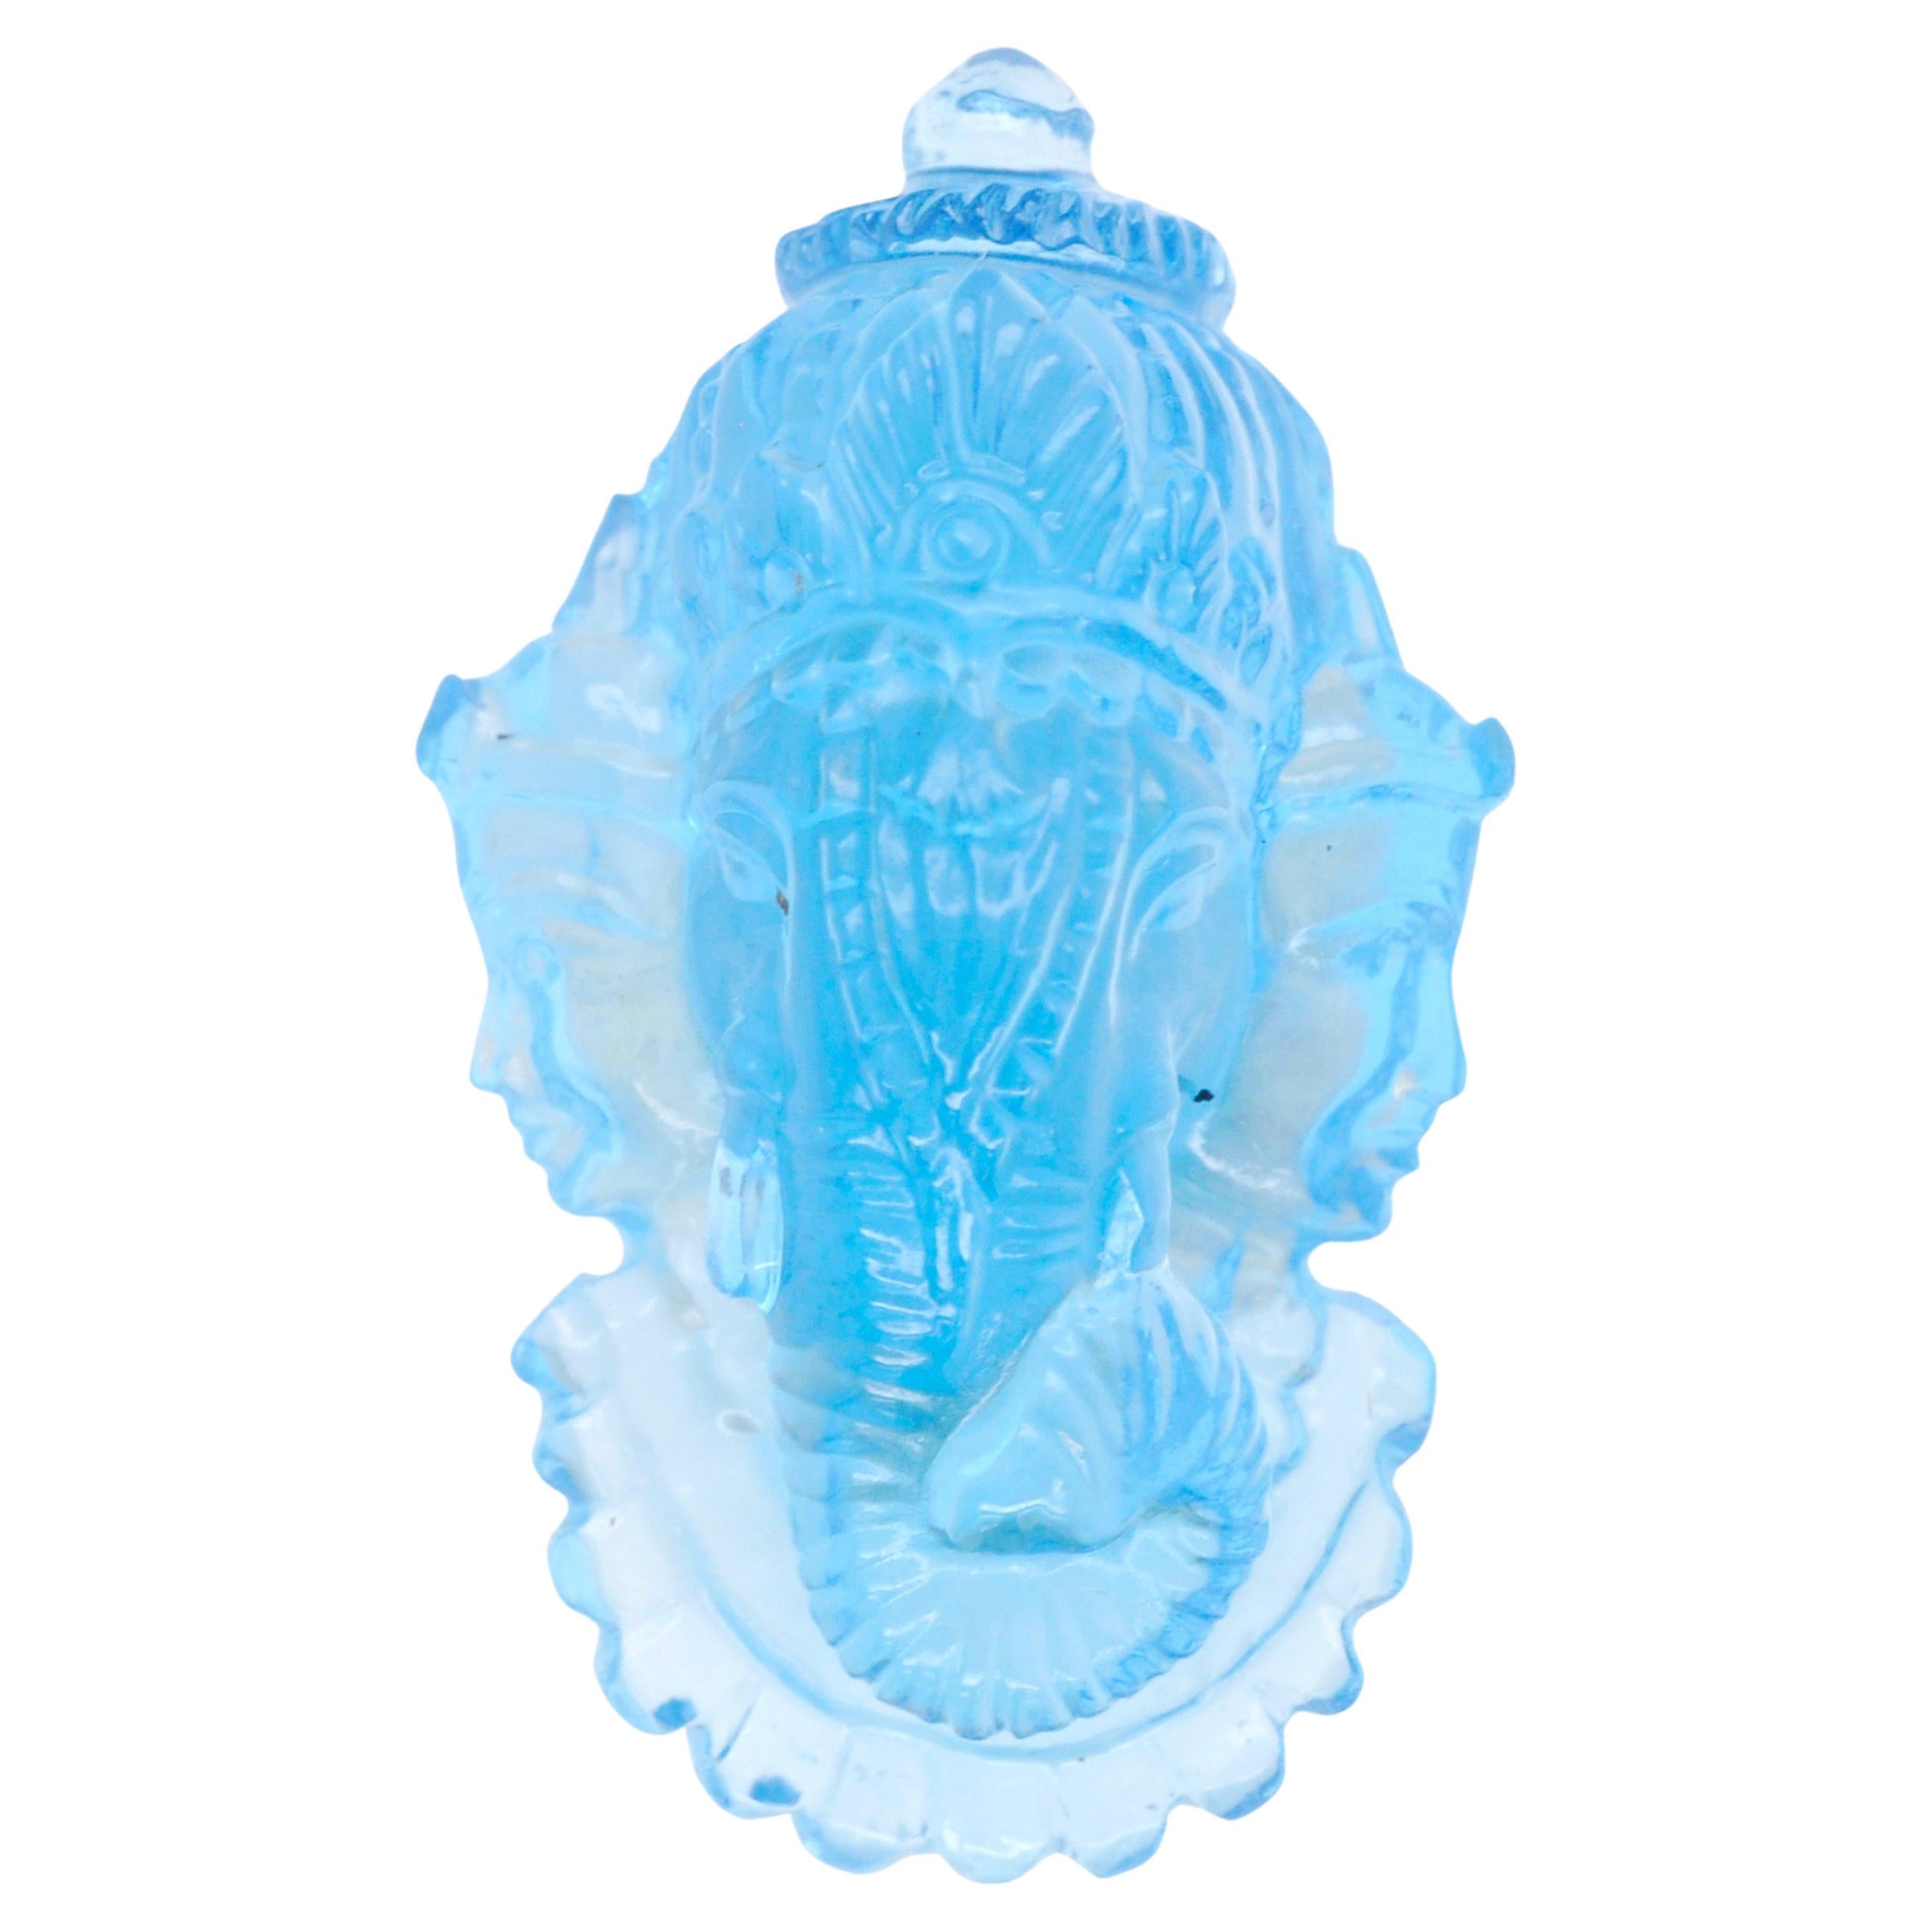 Pierre précieuse non sertie de 33,54 carats, topaze bleue suisse Ganesha Riddhi Siddhi